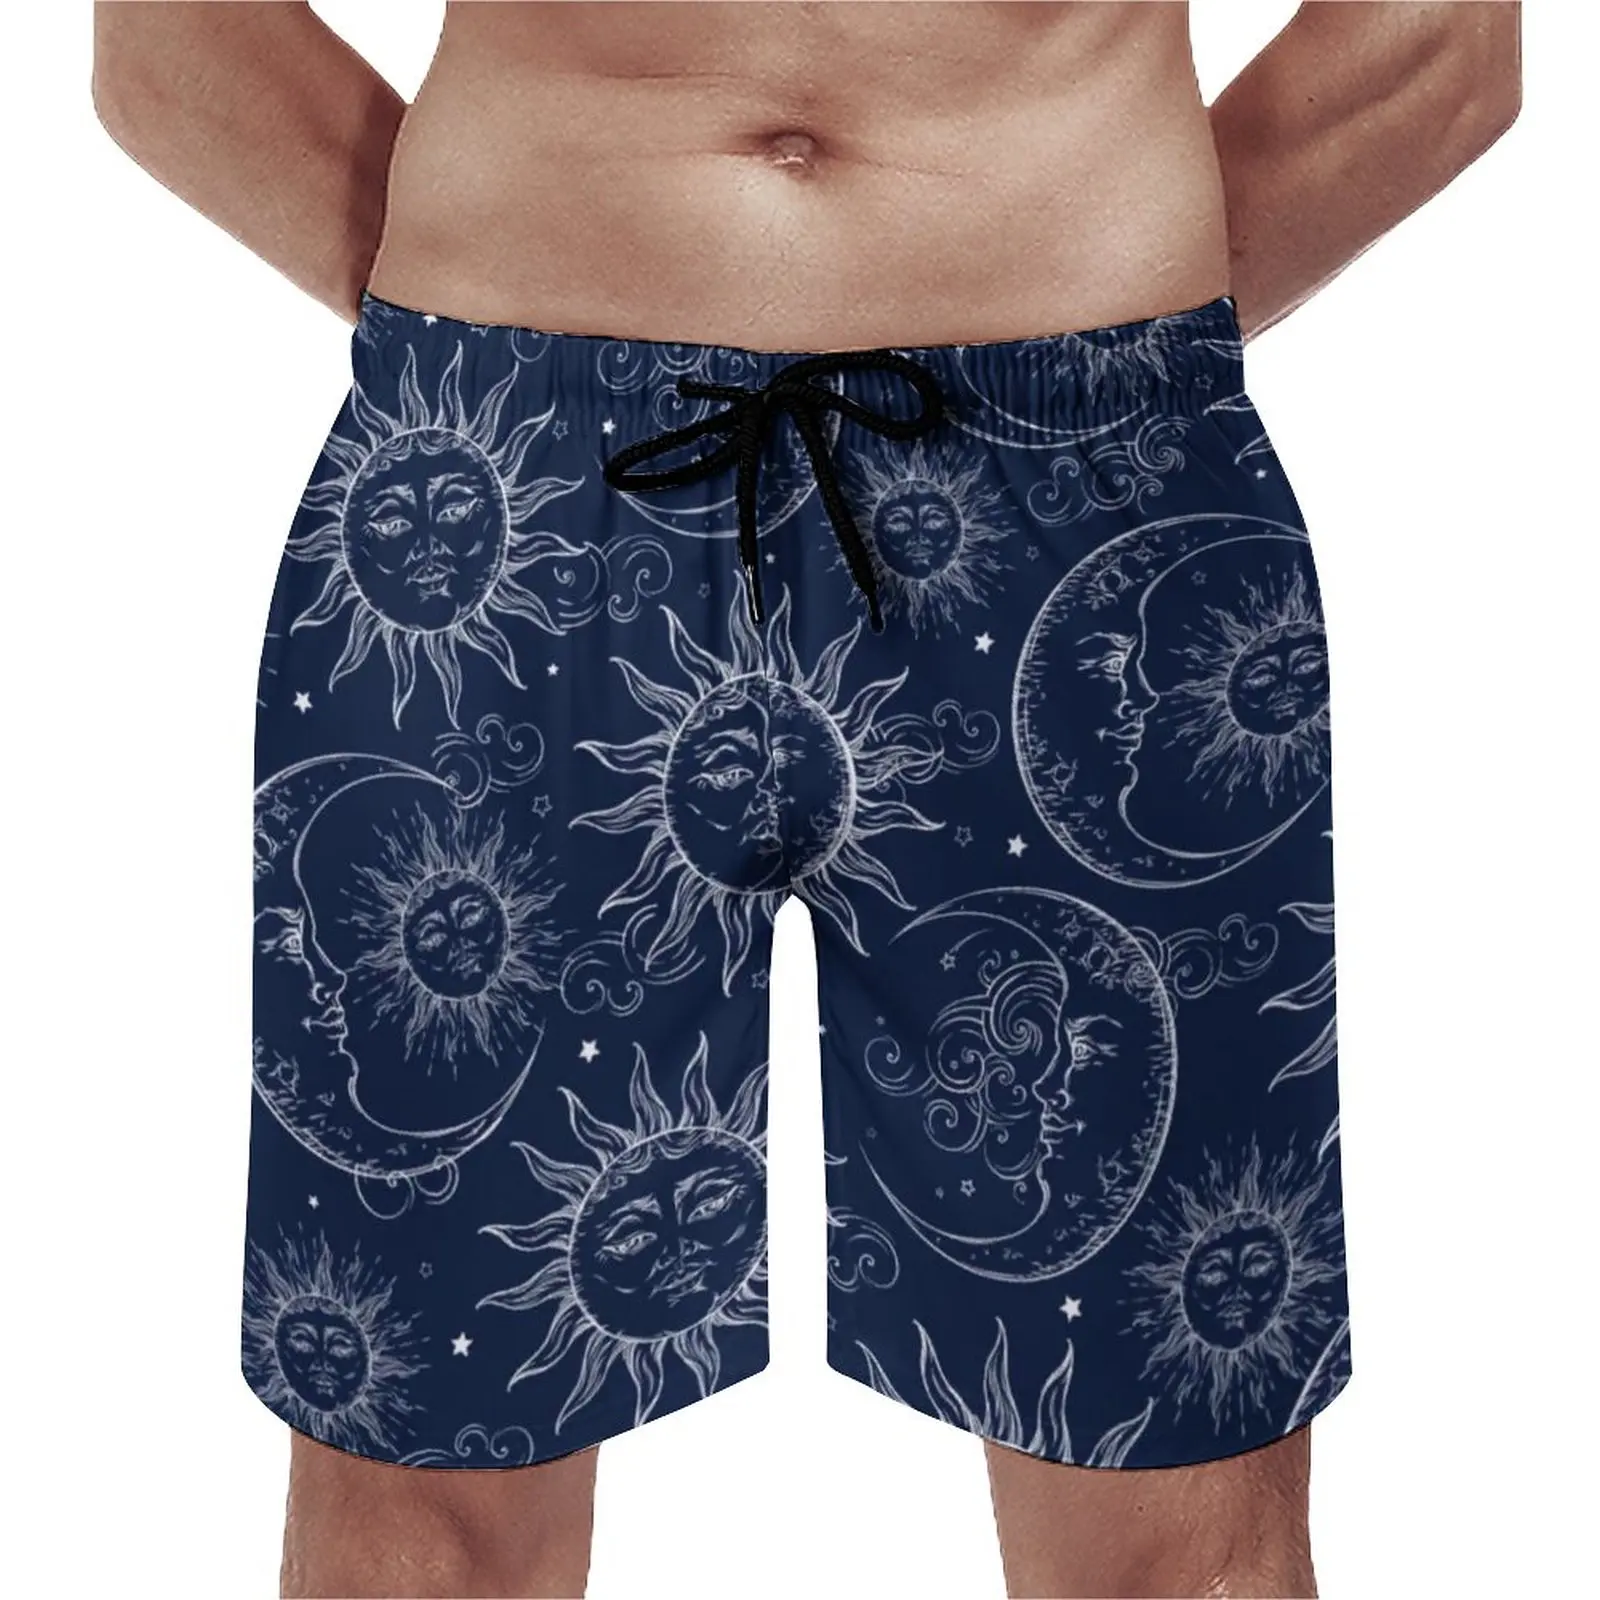 

Blue Magic Sun Board Shorts Vintage Celestial Moon Stars Classic Board Short Pants Males Print Plus Size Swim Trunks Gift idea